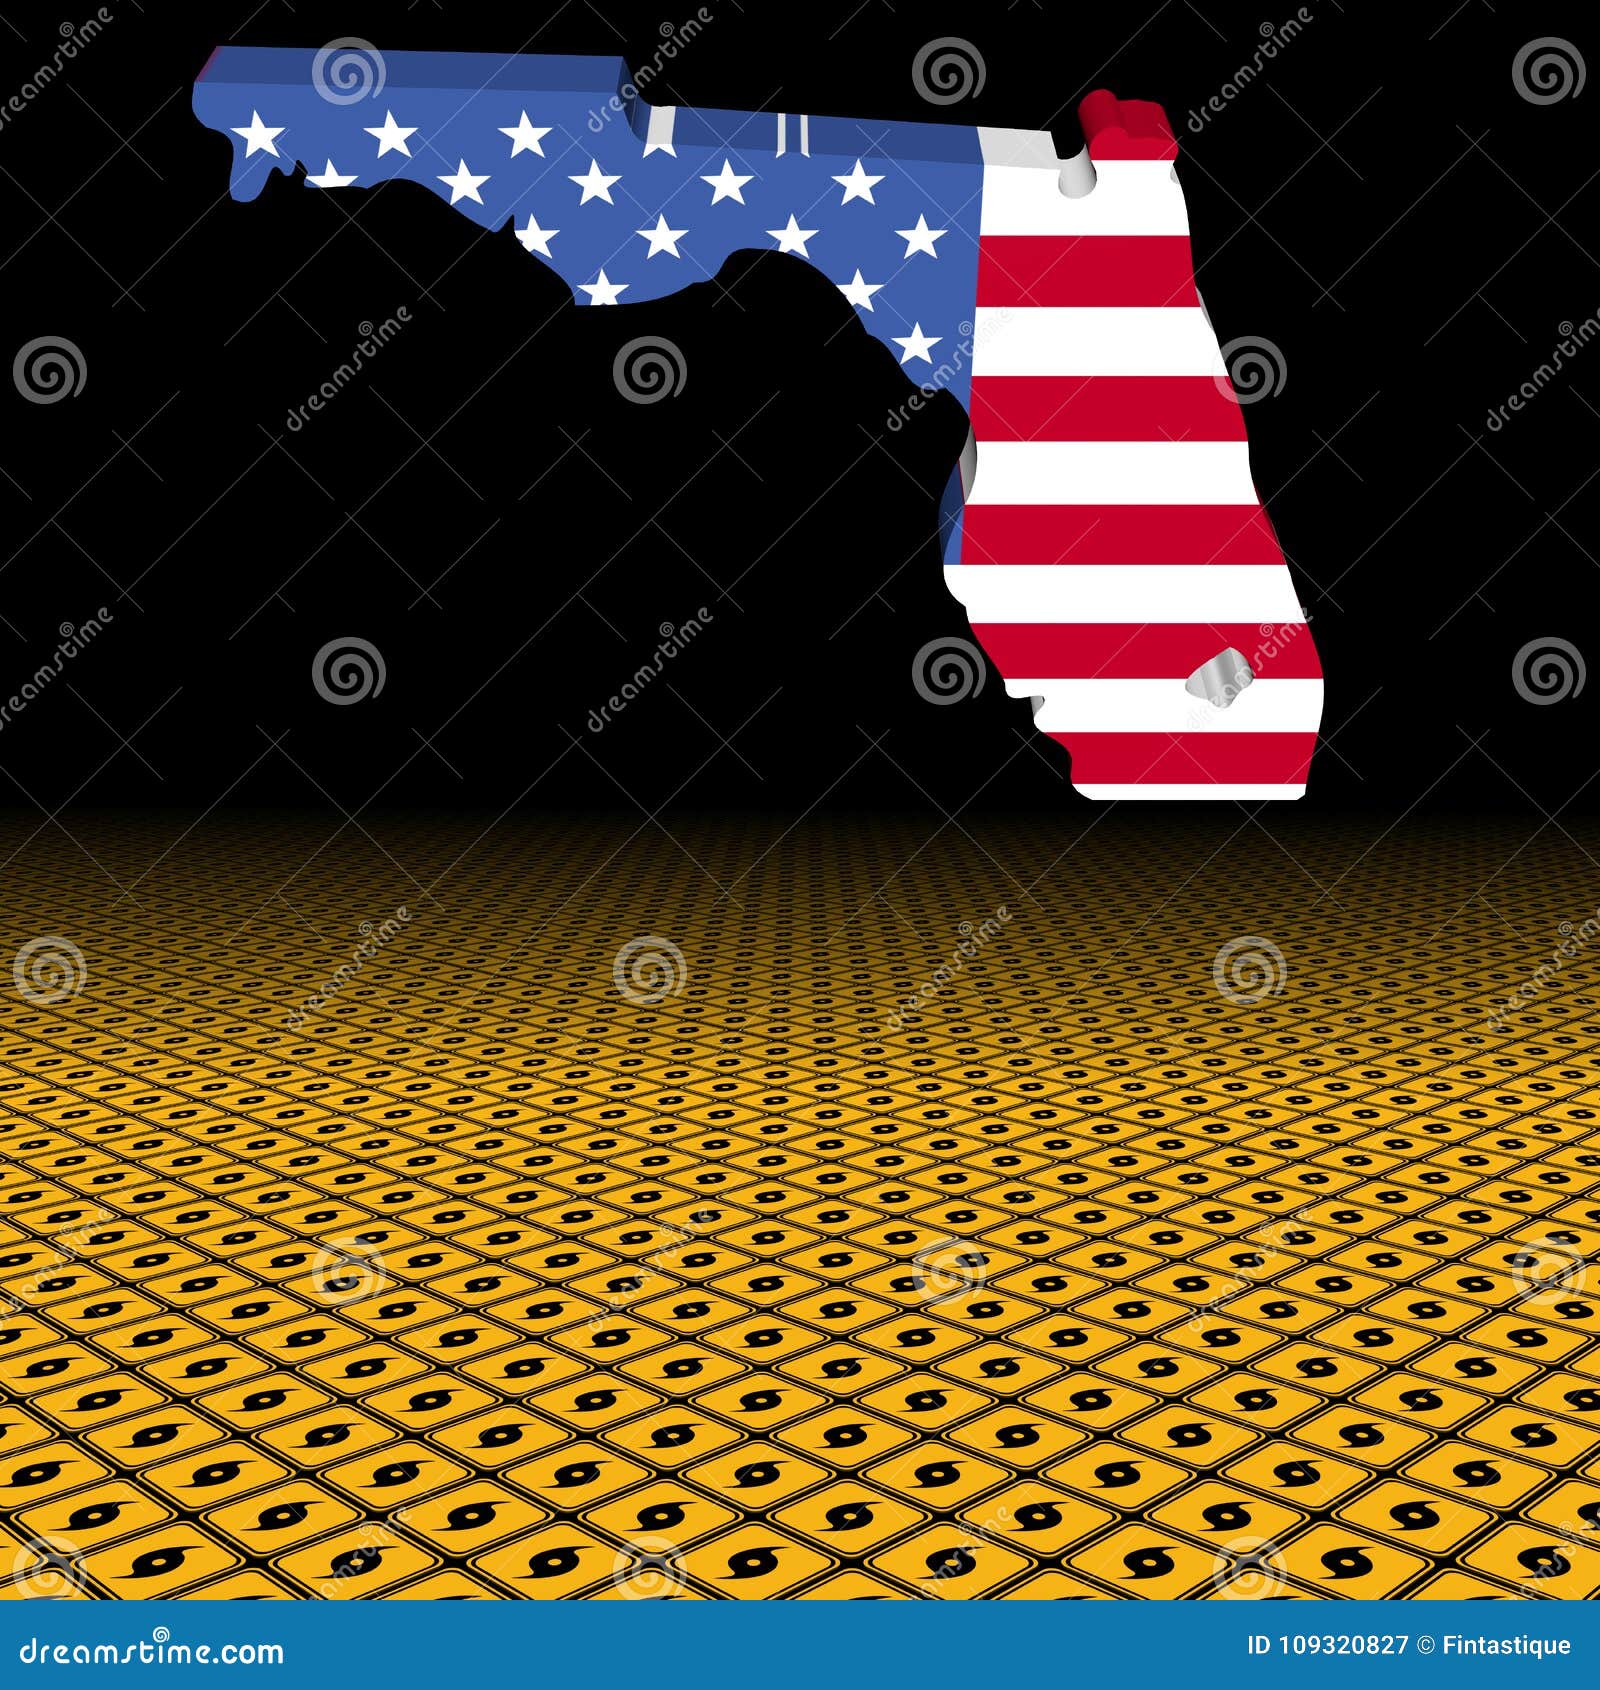 Florida Map Flag With Hurricane Warning Sign Foreground Illustration Stock Illustration ...